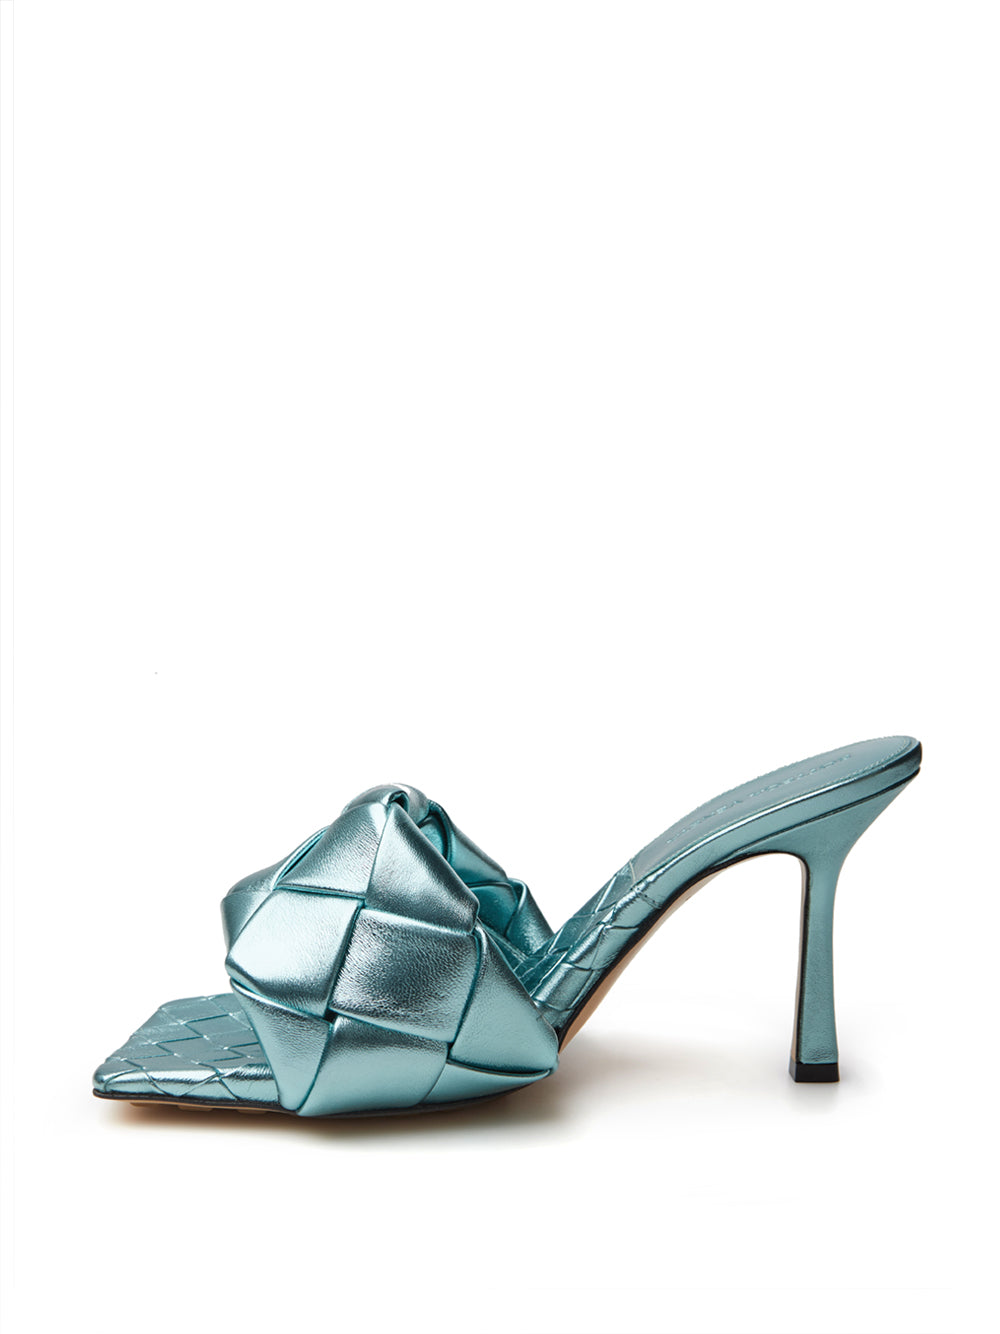 Bottega Veneta Light Blue Metal Mule 'Lido' Sandal